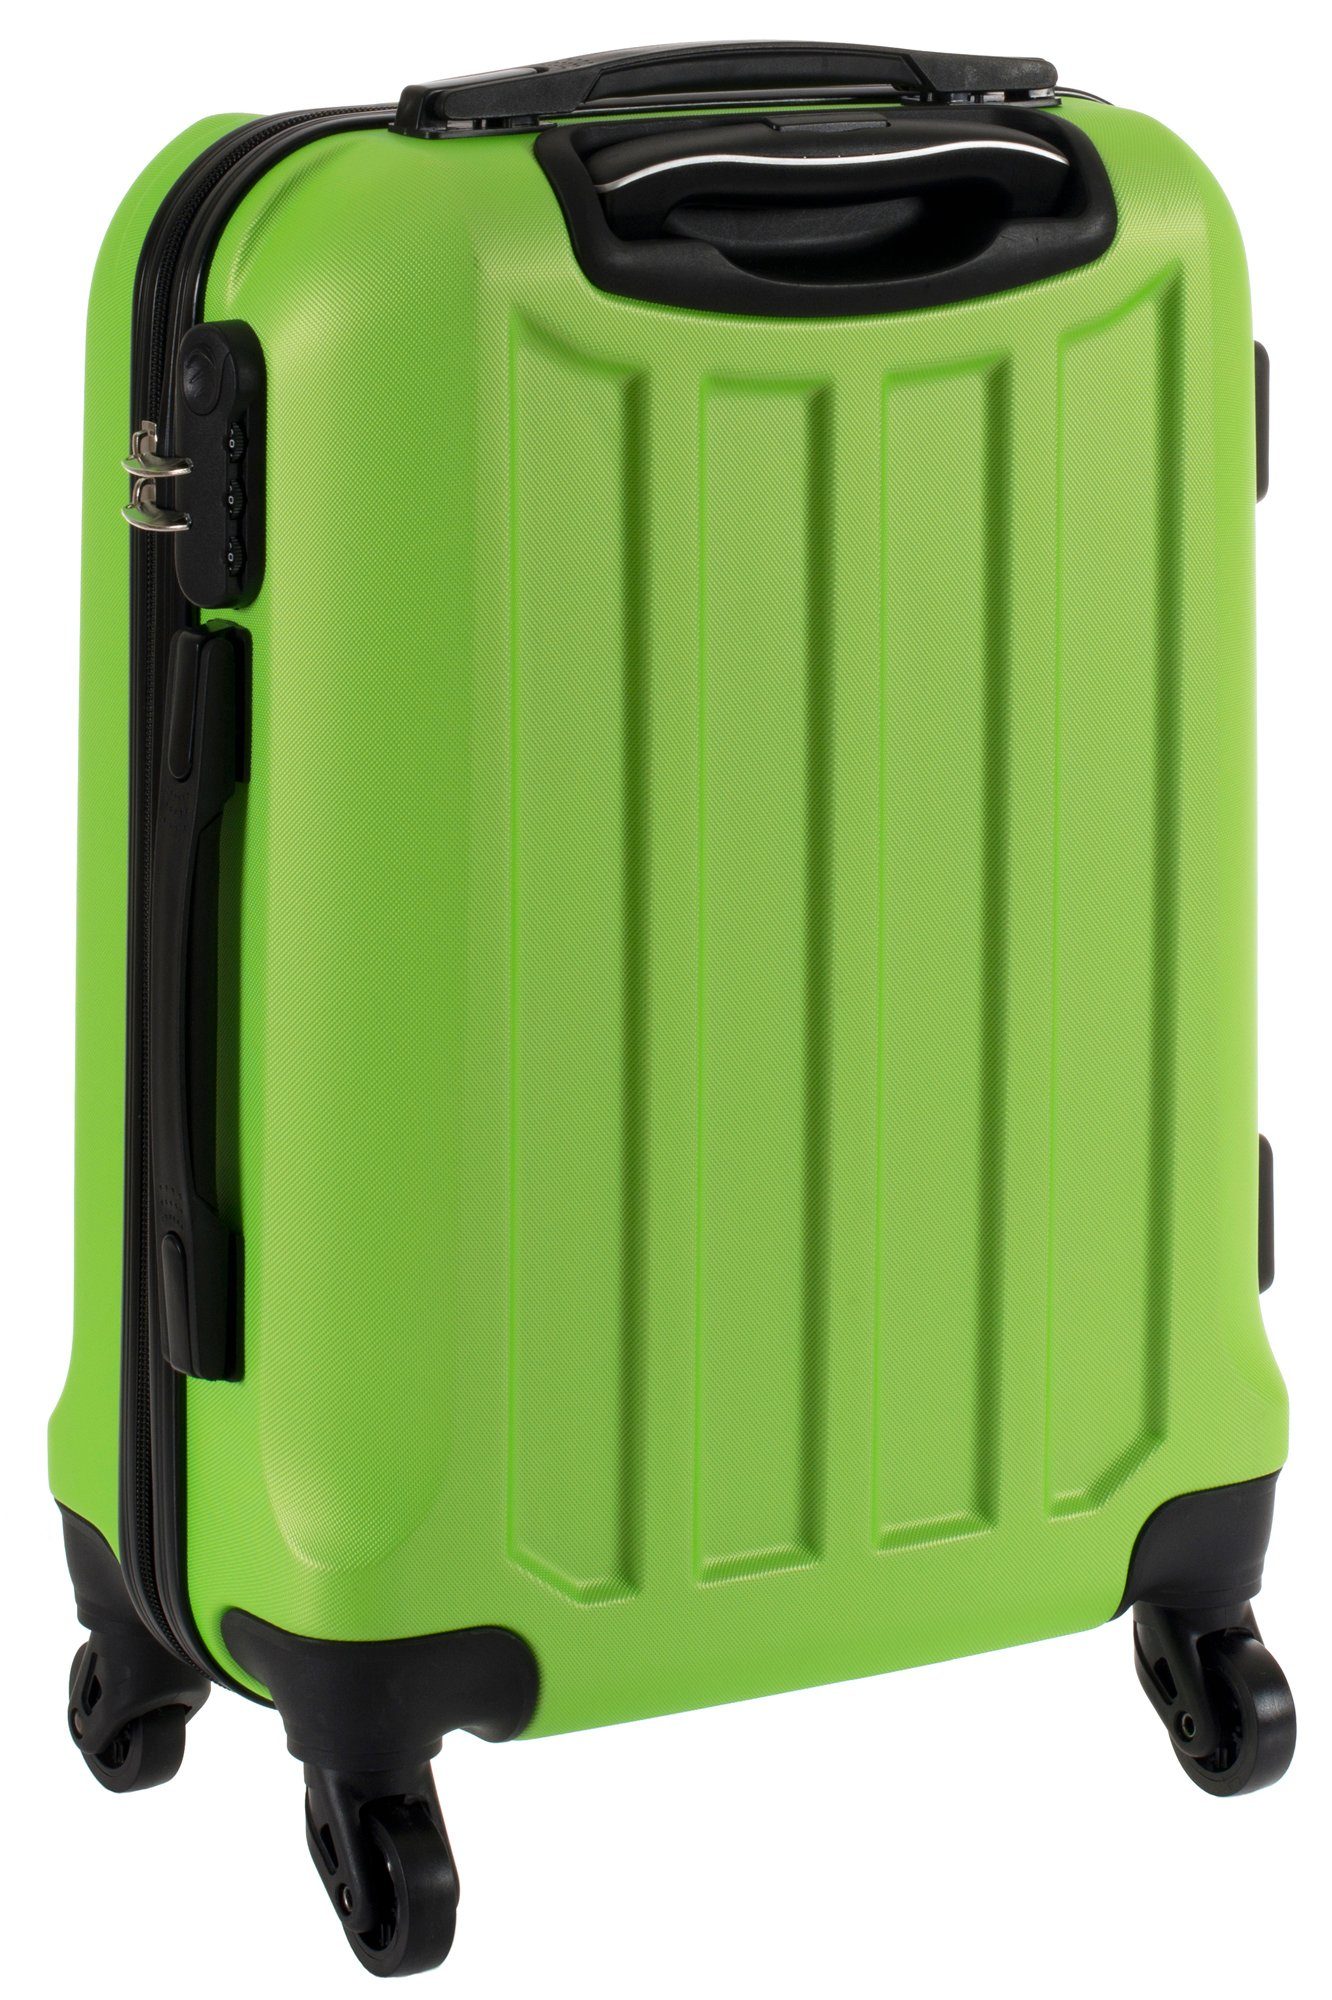 Koffer Handgepäck-Trolley Rollen 4 Trolley Hartschalenkoffer 4-Rollen, Handgepäck grün Kabinengepäck Cahoon